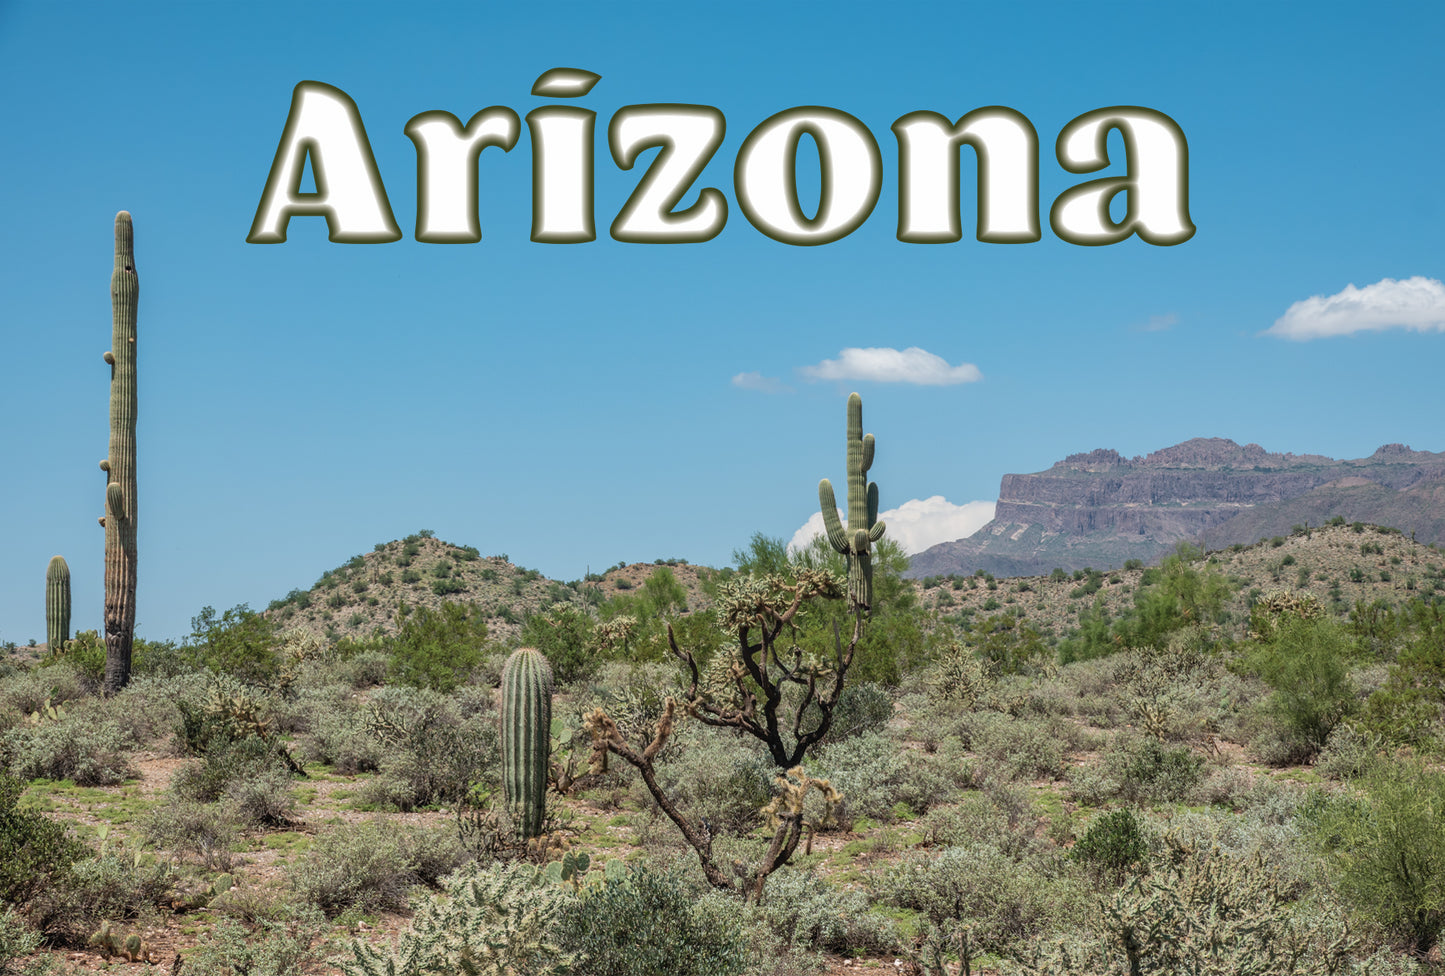 Arizona Desert Scene Postcard